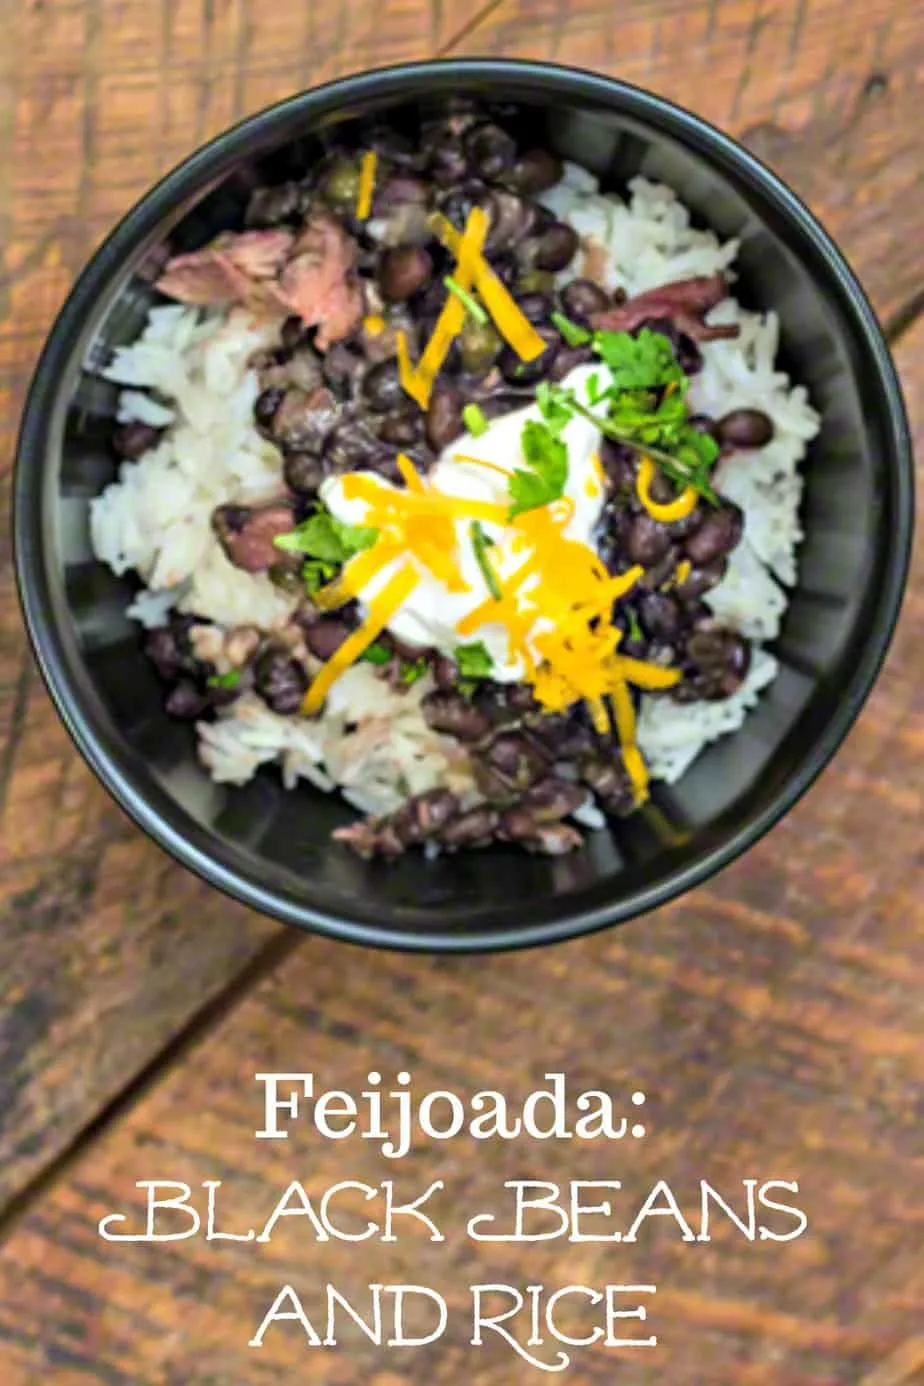 Feijoada, or, Brazilian Black Beans and Rice is the National Dish of Brazil. #blackbeans #Brazilian #recipe #frugal